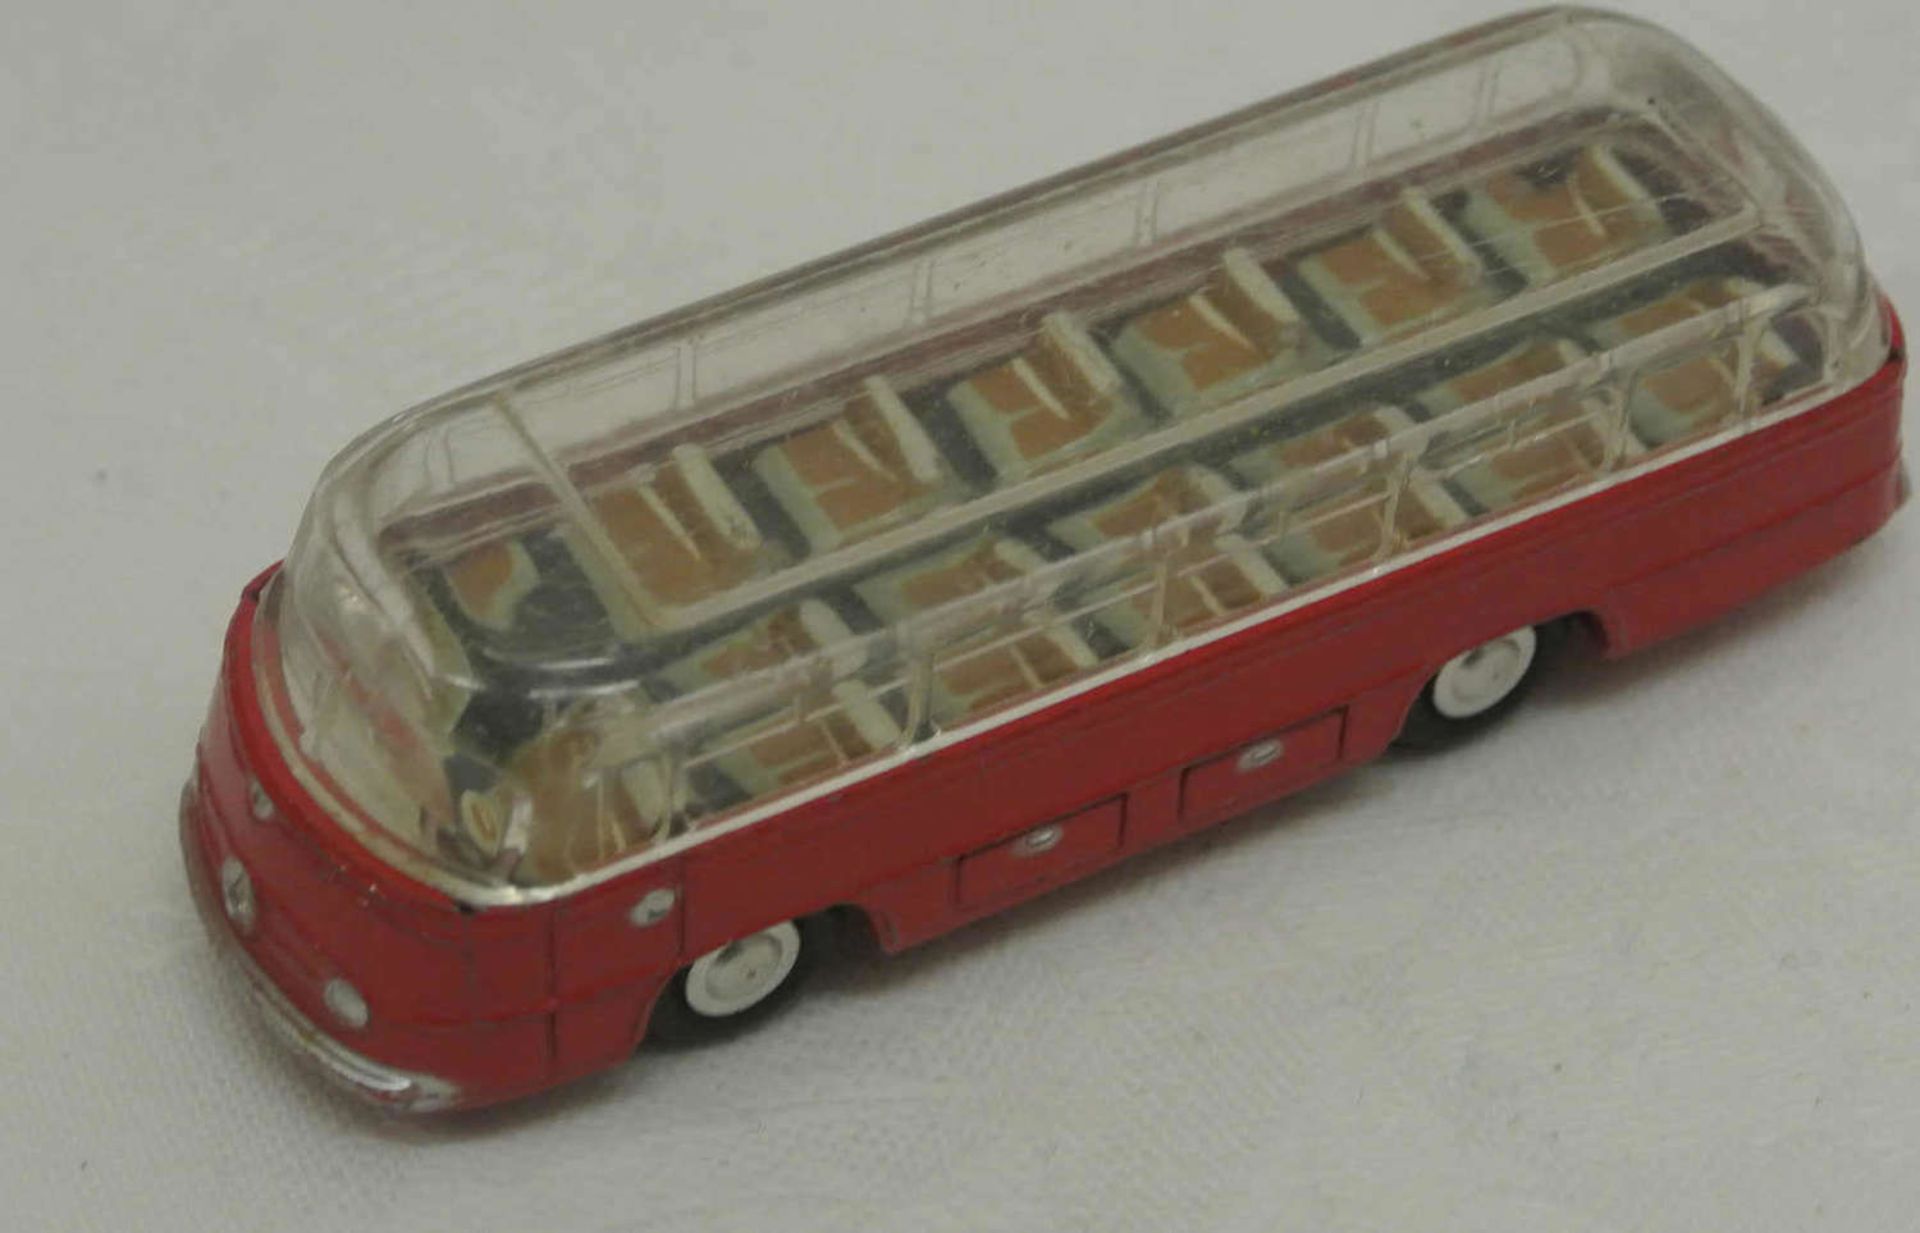 Original Vintage 1958-1969 Schucco Piccolo 740 Mercedes Bus, rot, Metall Original Vintage 1958-